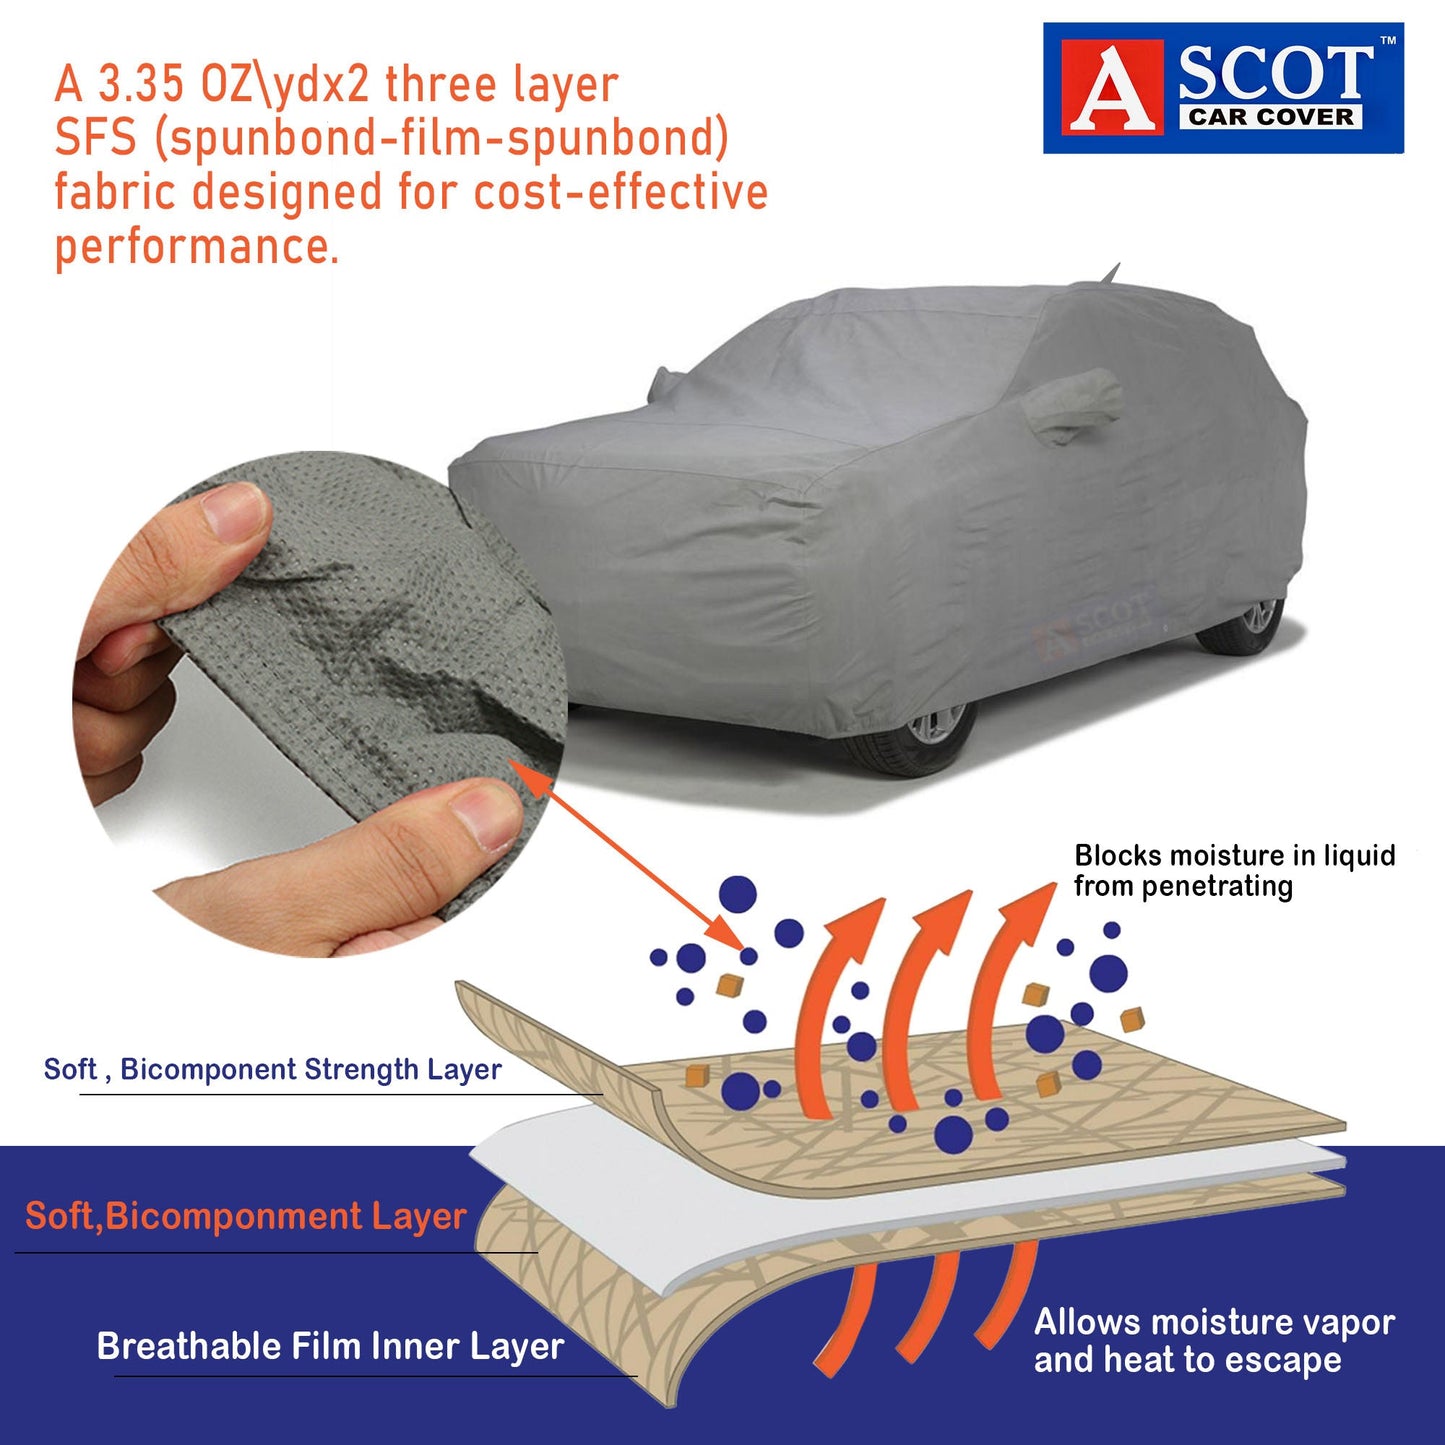 Ascot Tata Safari / Safari Facelift Car Cover Waterproof 2021-2024 Model with Mirror & Antenna Pockets 3 Layers Custom-Fit All Weather Heat Resistant UV Proof